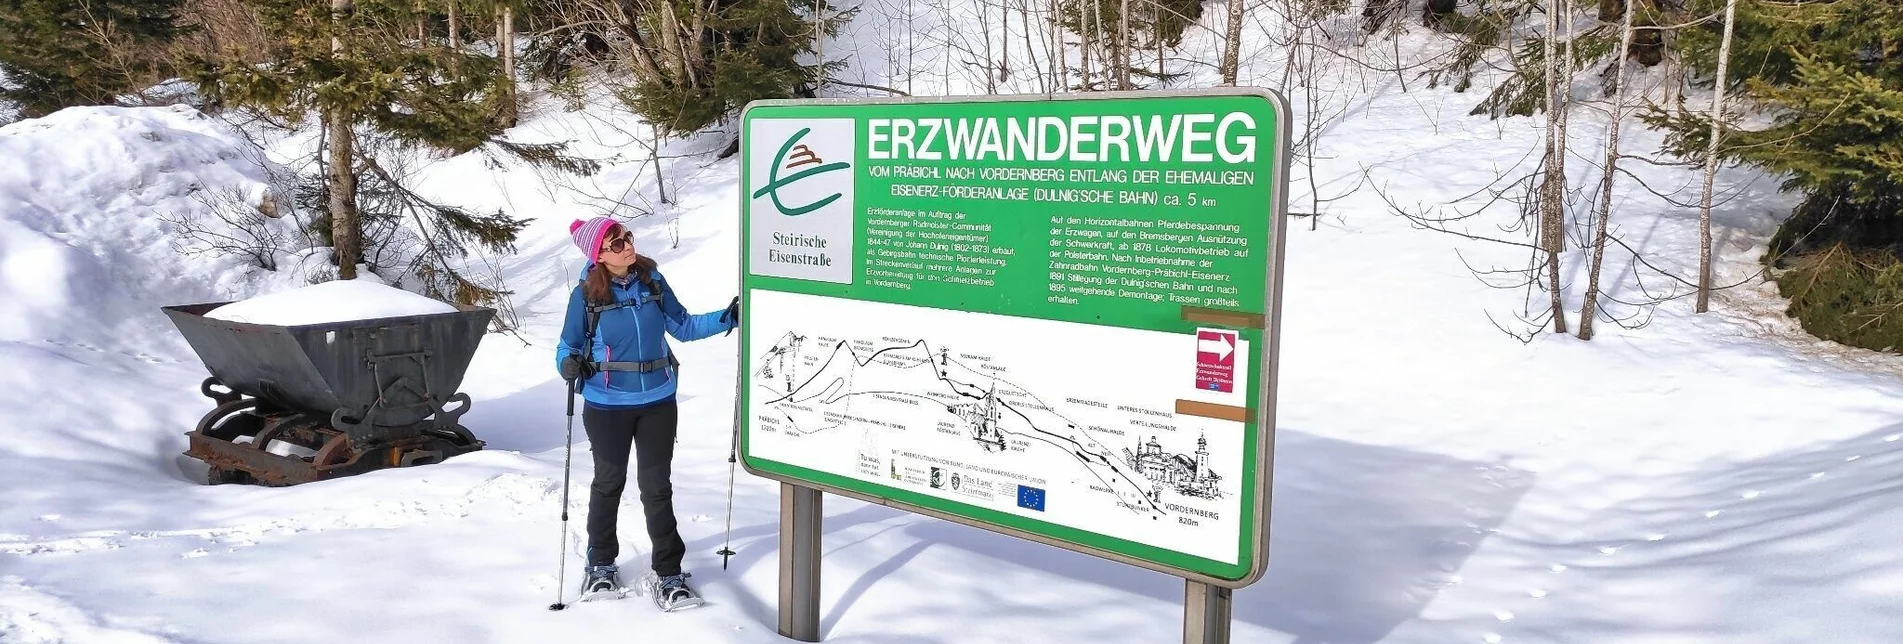 Snowshoe walking Erzwanderweg - Touren-Impression #1 | © Weges OG